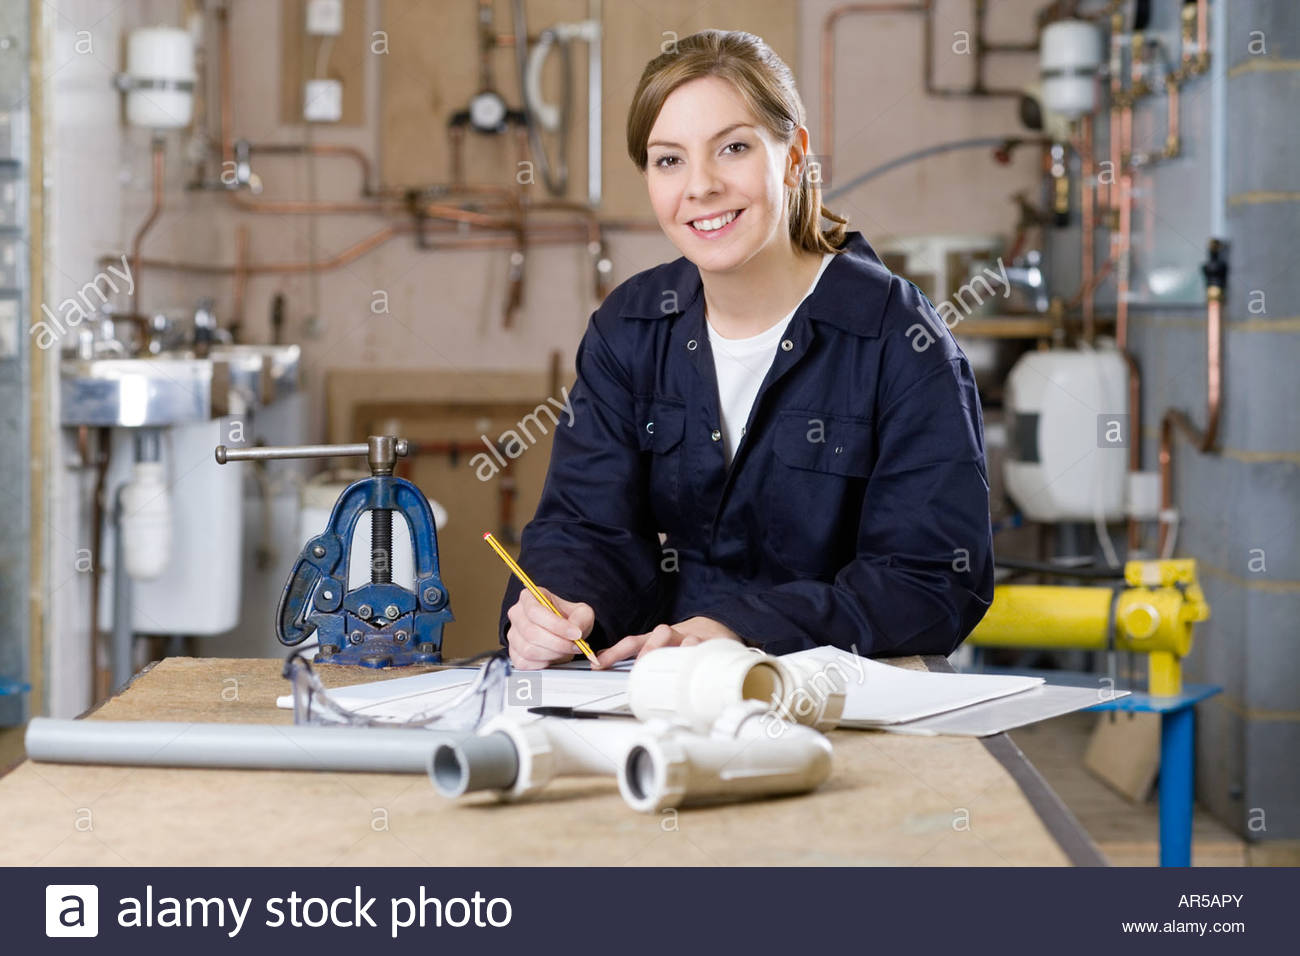 apprentice-plumber-stock-photo-royalty-free-image-15943922-alamy